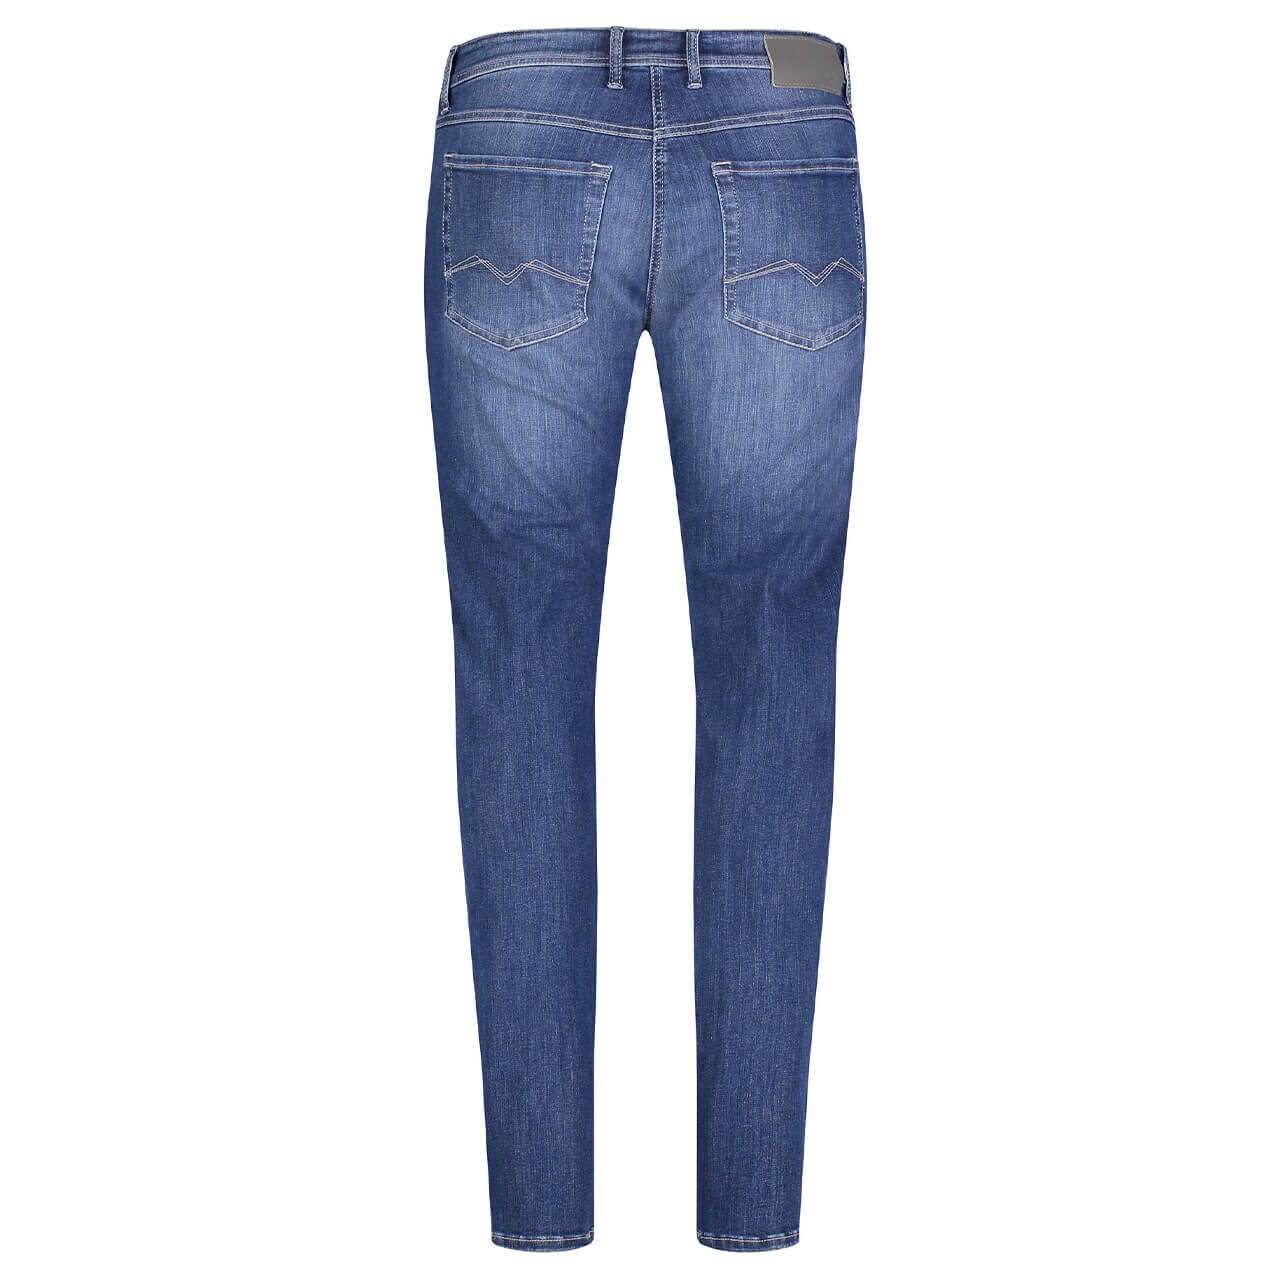 MAC Flexx Jeans deep blue vintage wash